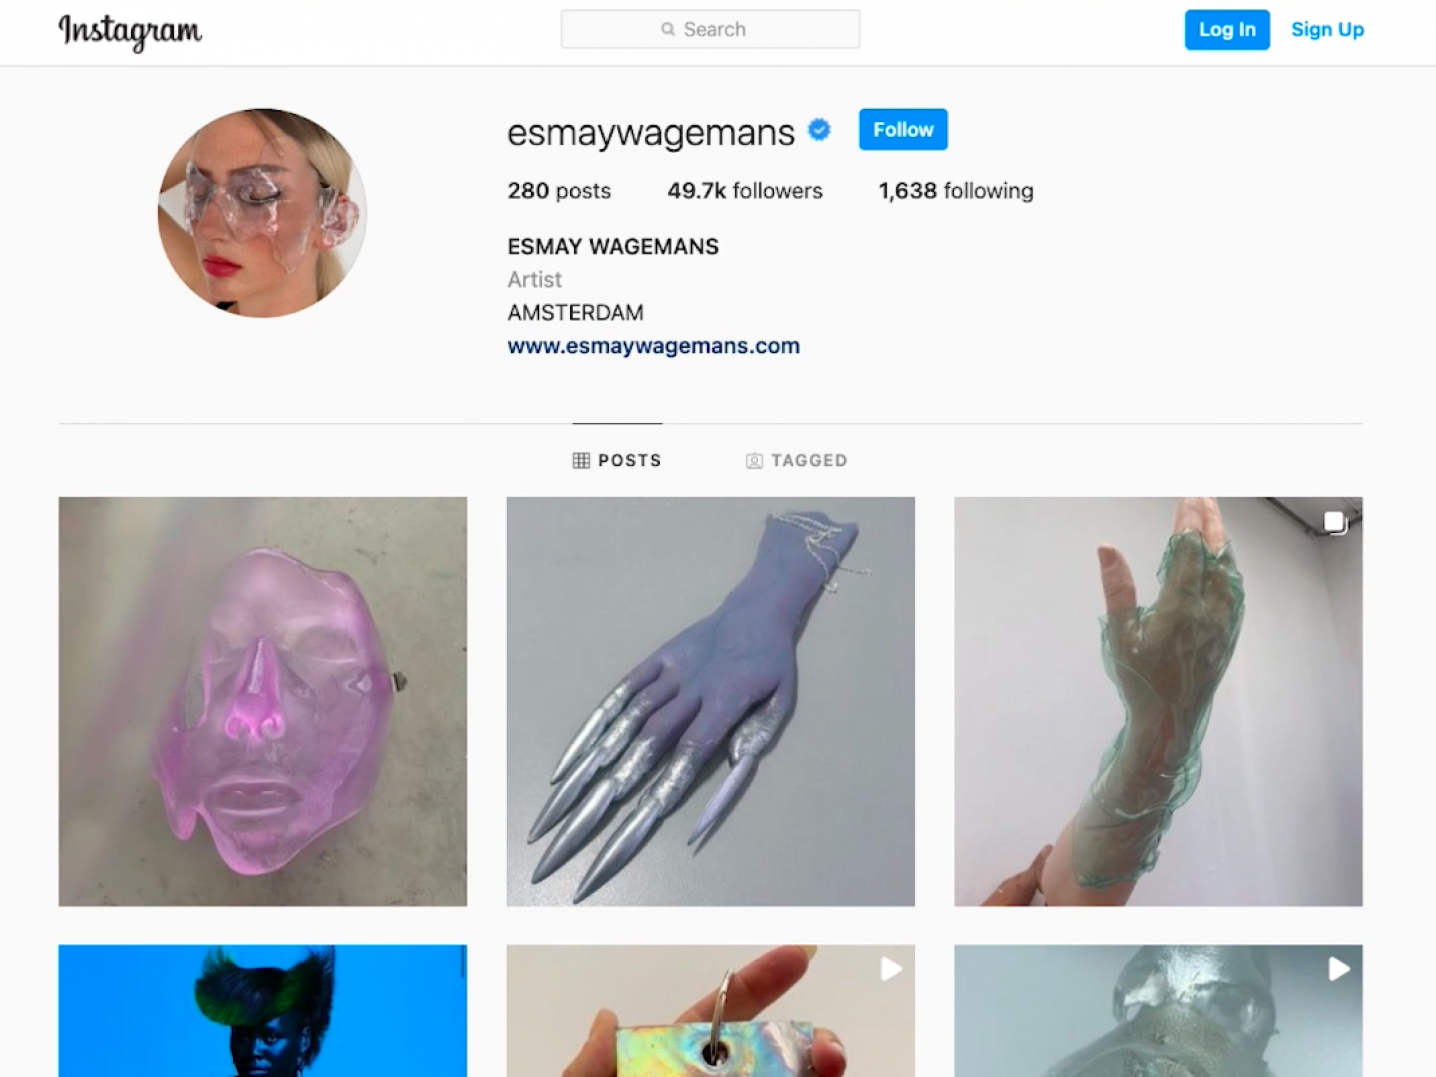 Esmay Wagemans' work on her Instagram page.